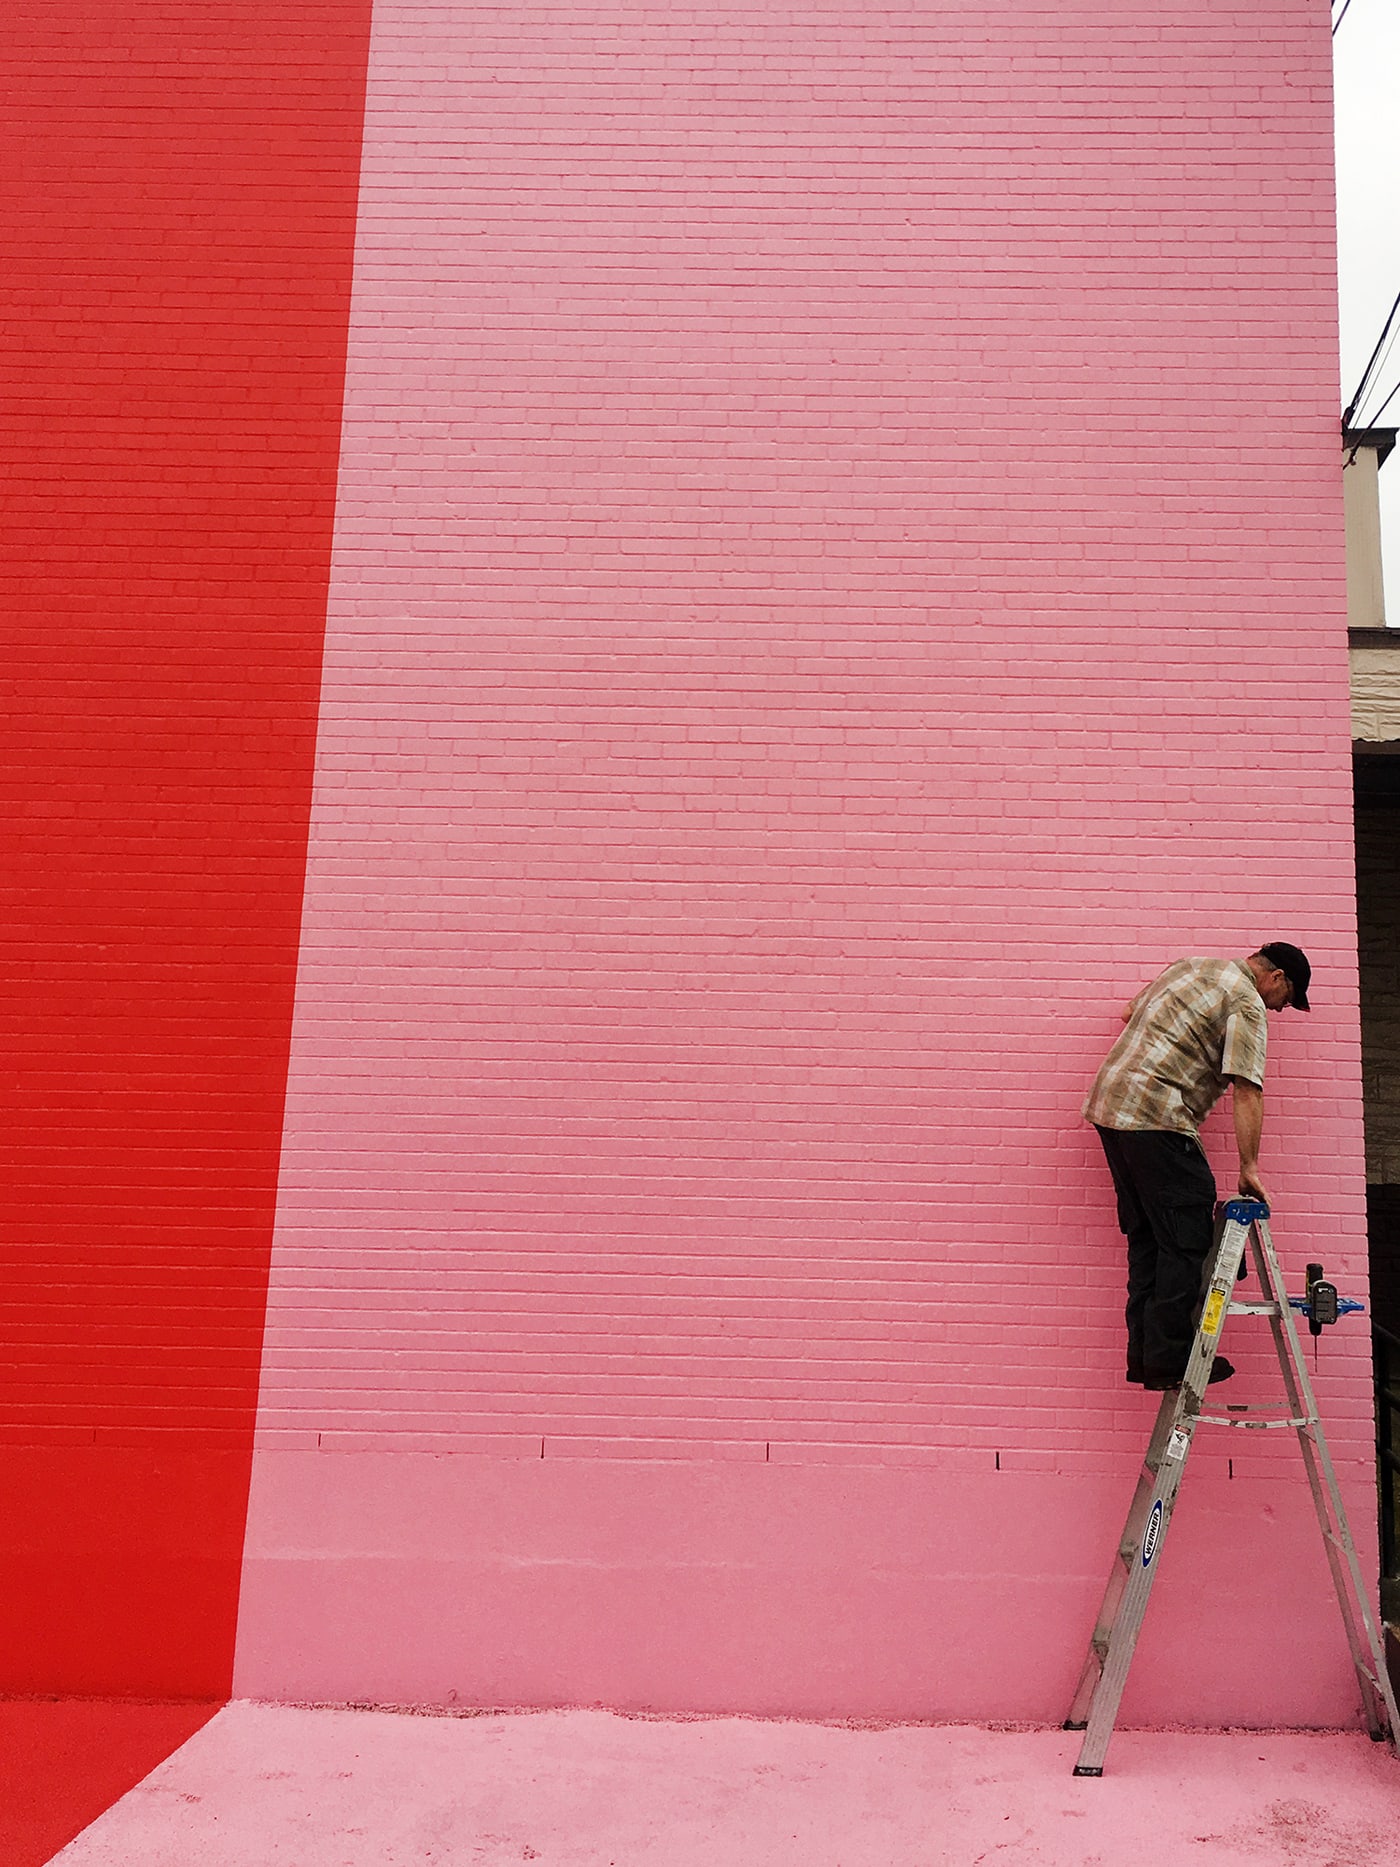 The Sugar and Cloth color wall in Houston, Texas ! #sugarandclothcolorwall